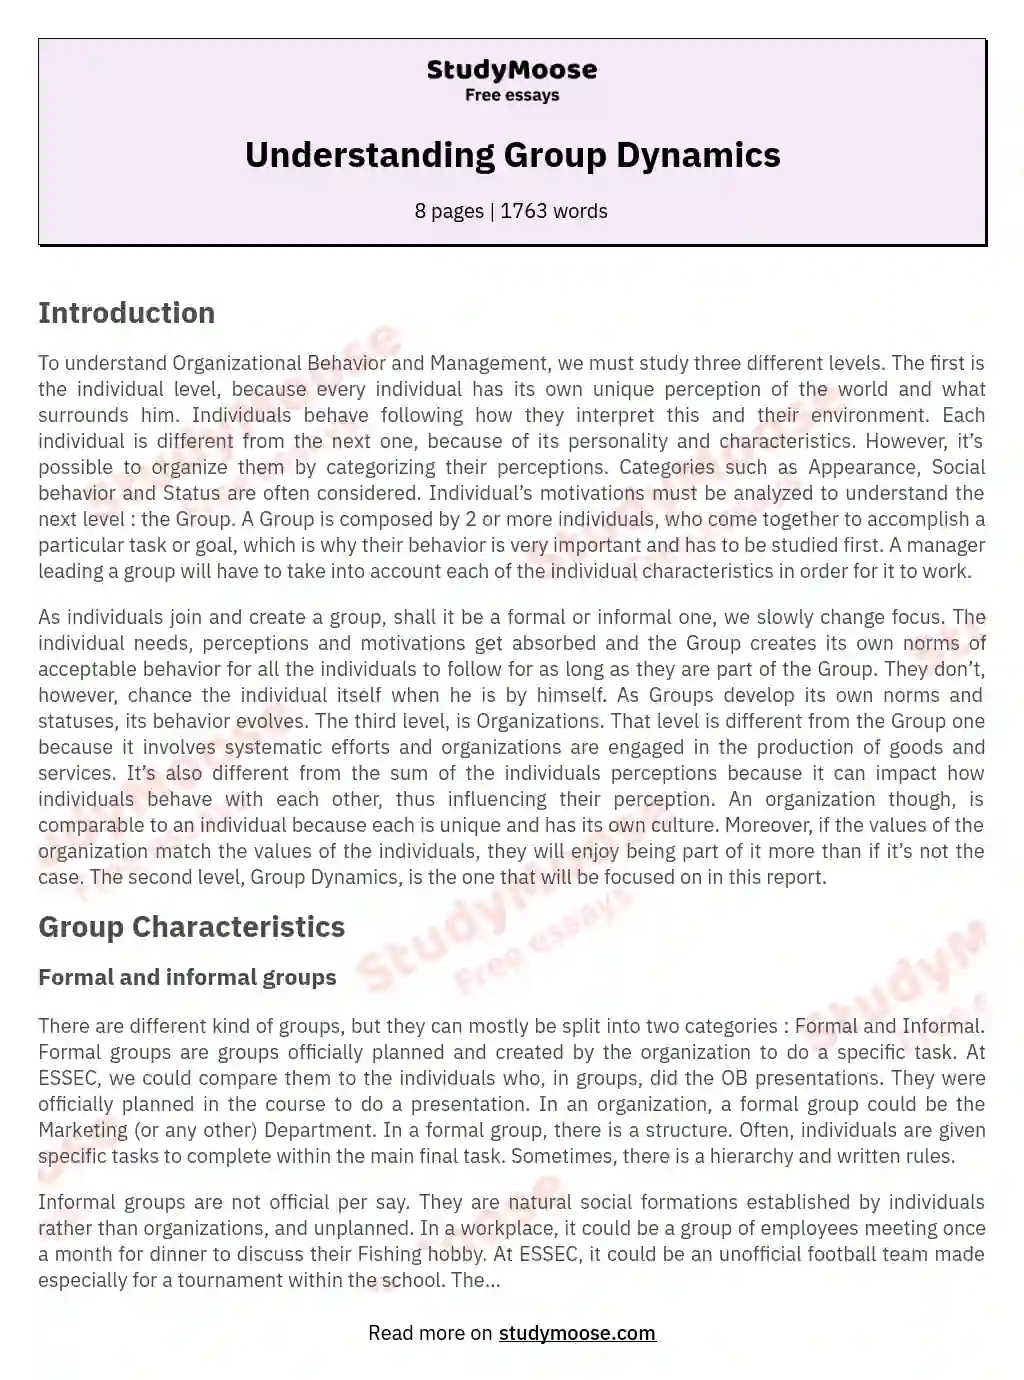 Understanding Group Dynamics essay